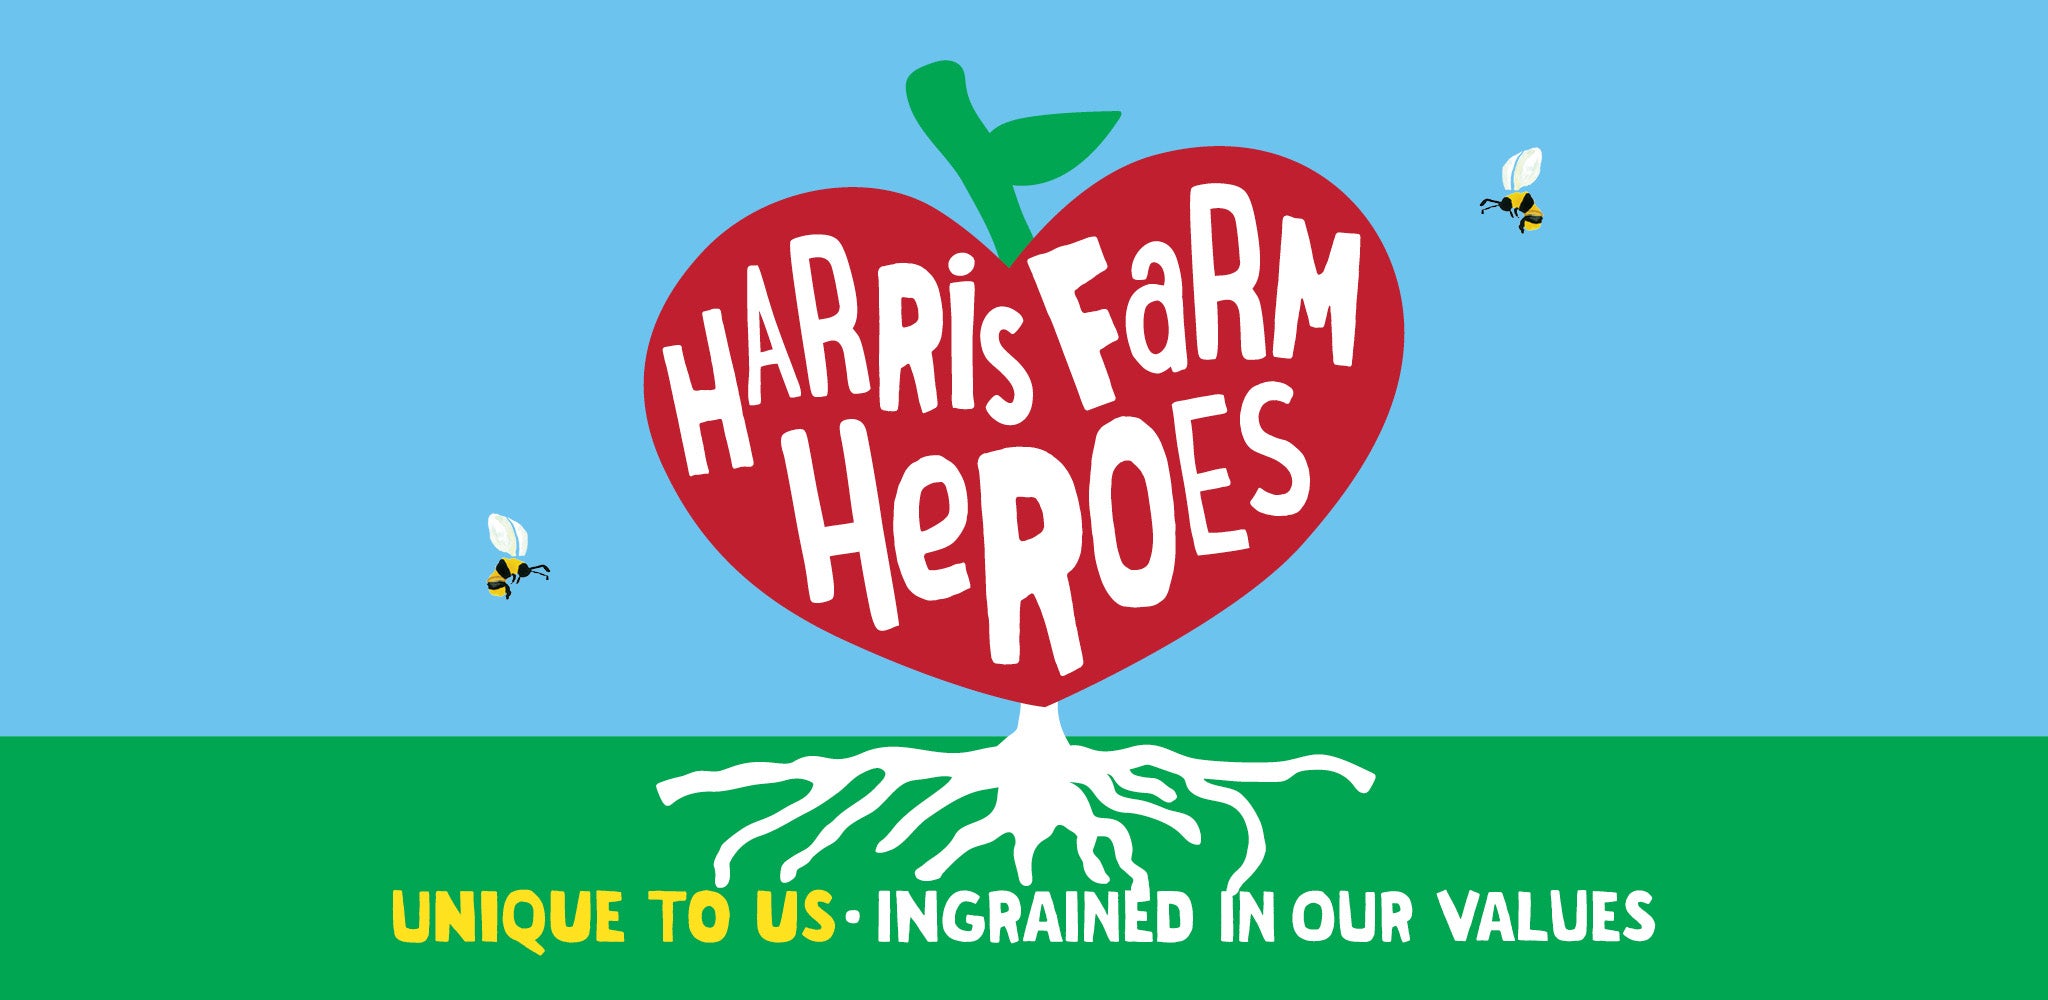 'Harris Farm Heroes